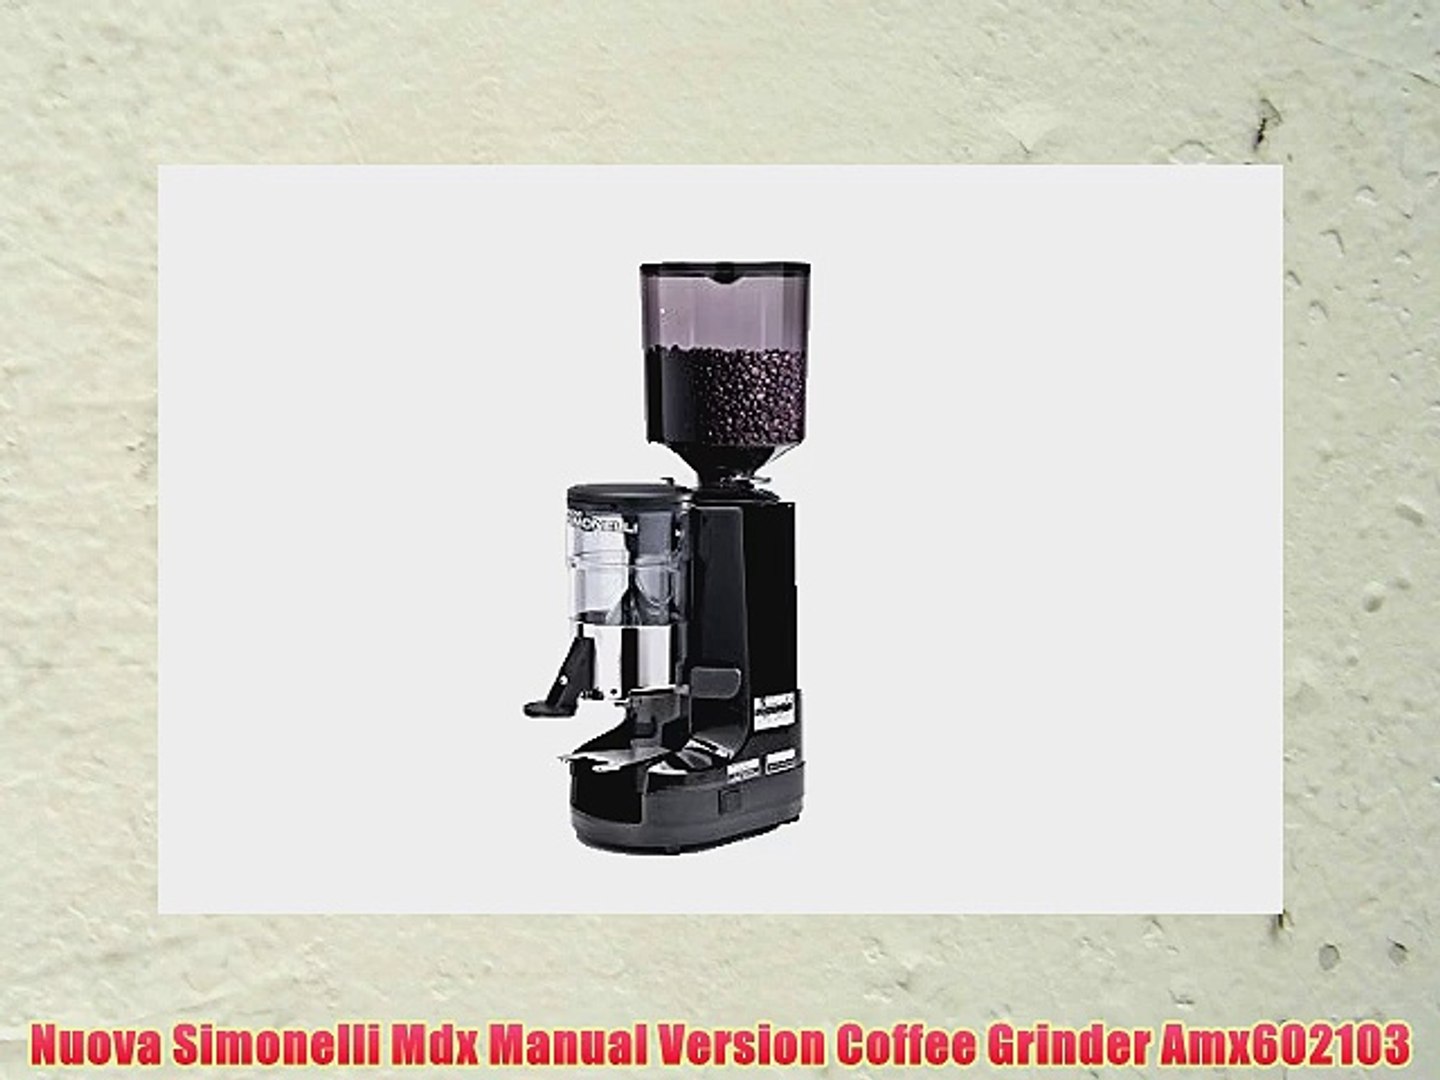 Nuova Simonelli Mdx Manual Version Coffee Grinder Amx602103 - video  Dailymotion